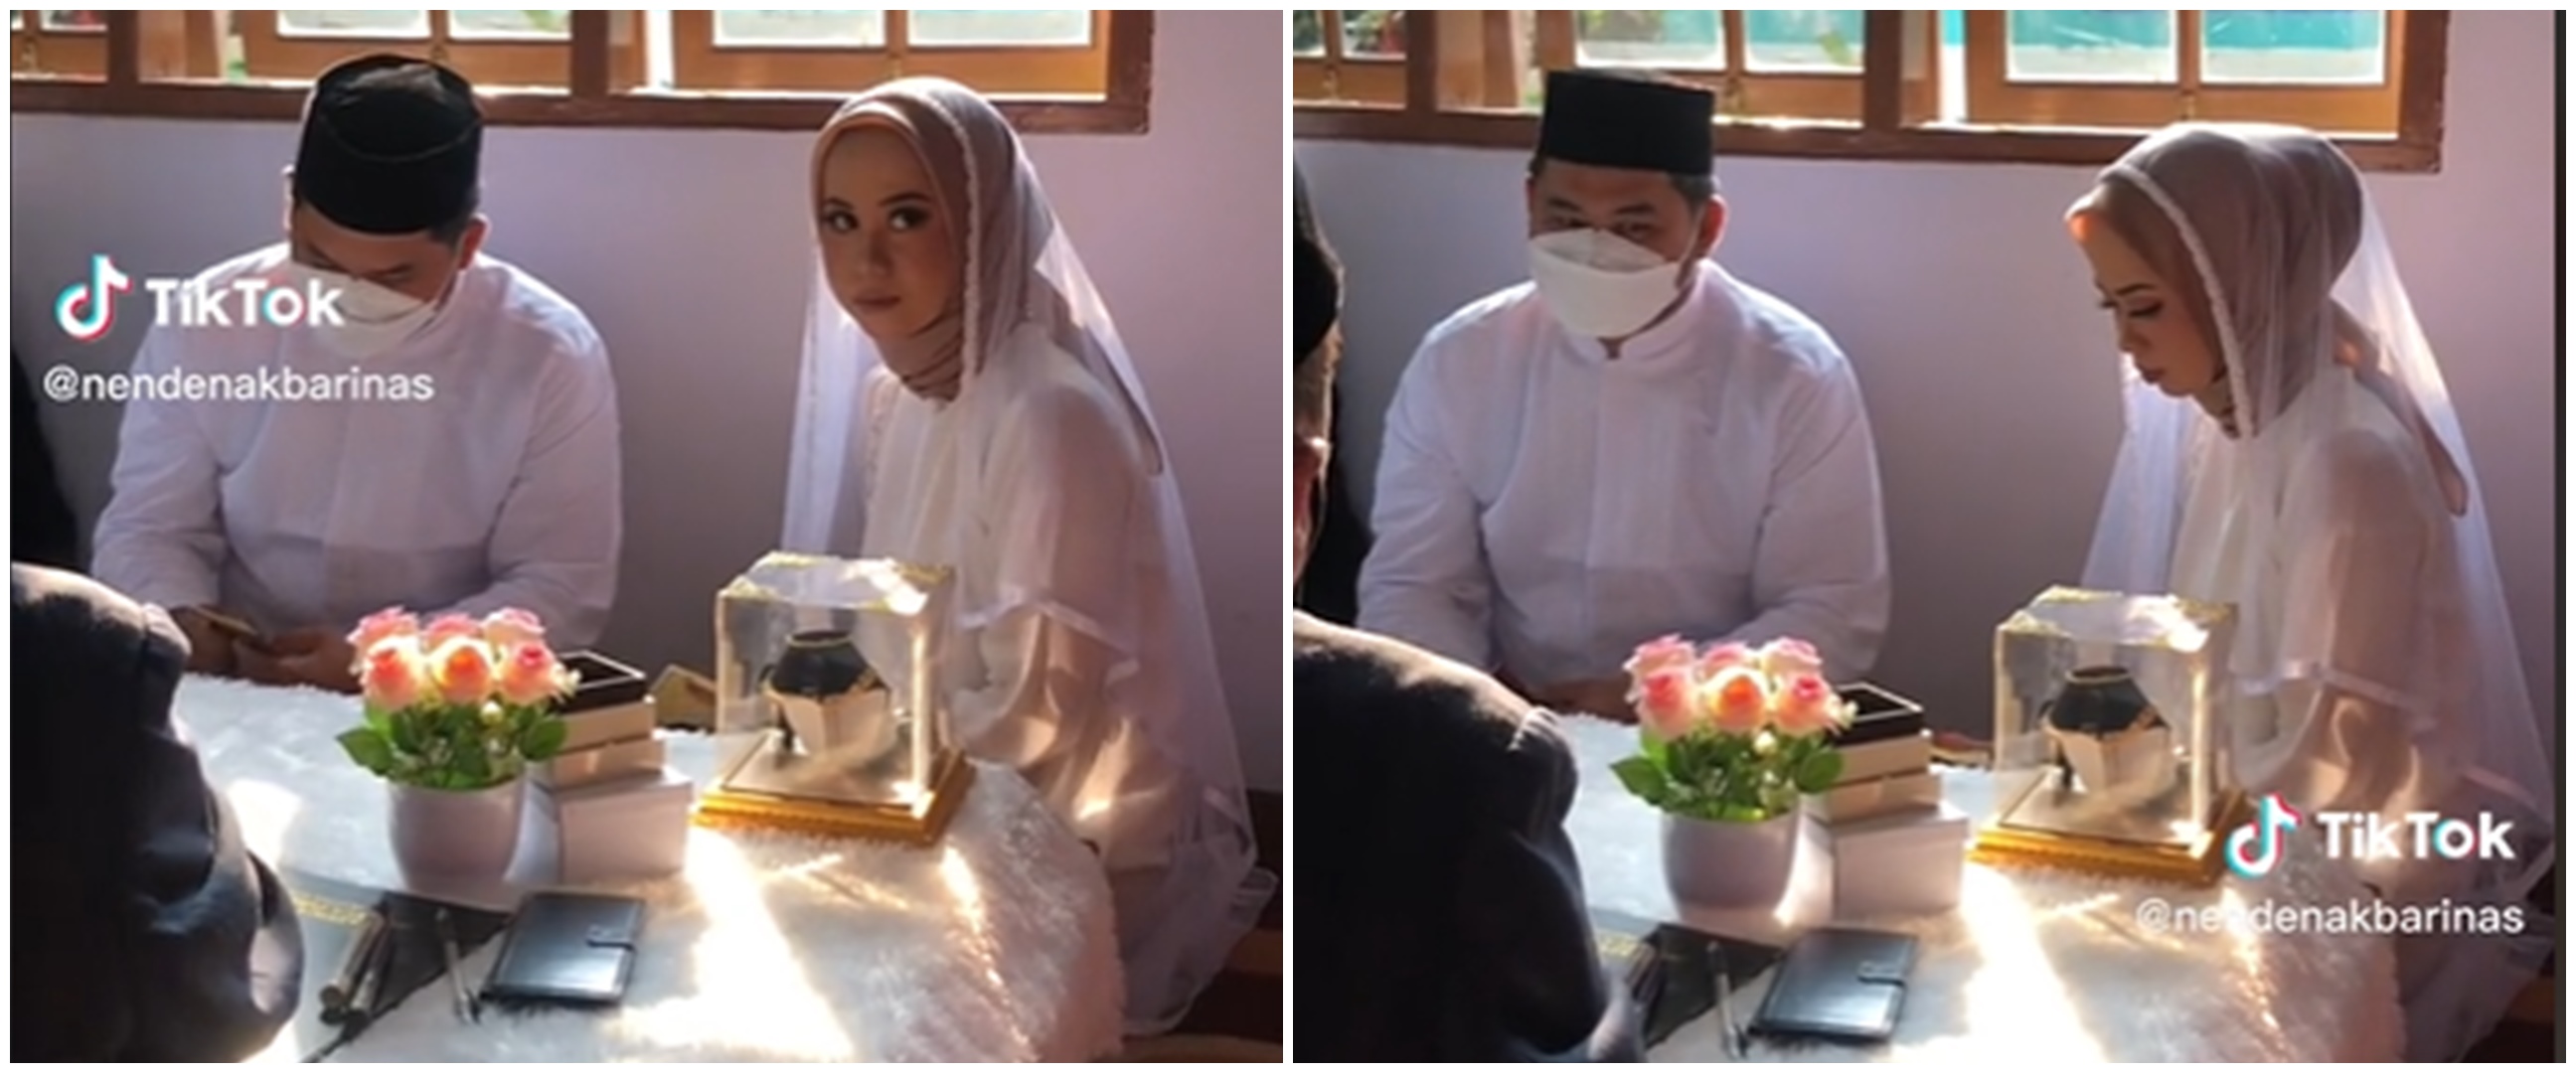 Pasangan menikah di rumah, pengantin wanita memakai kerudung Rp 13 ribuan